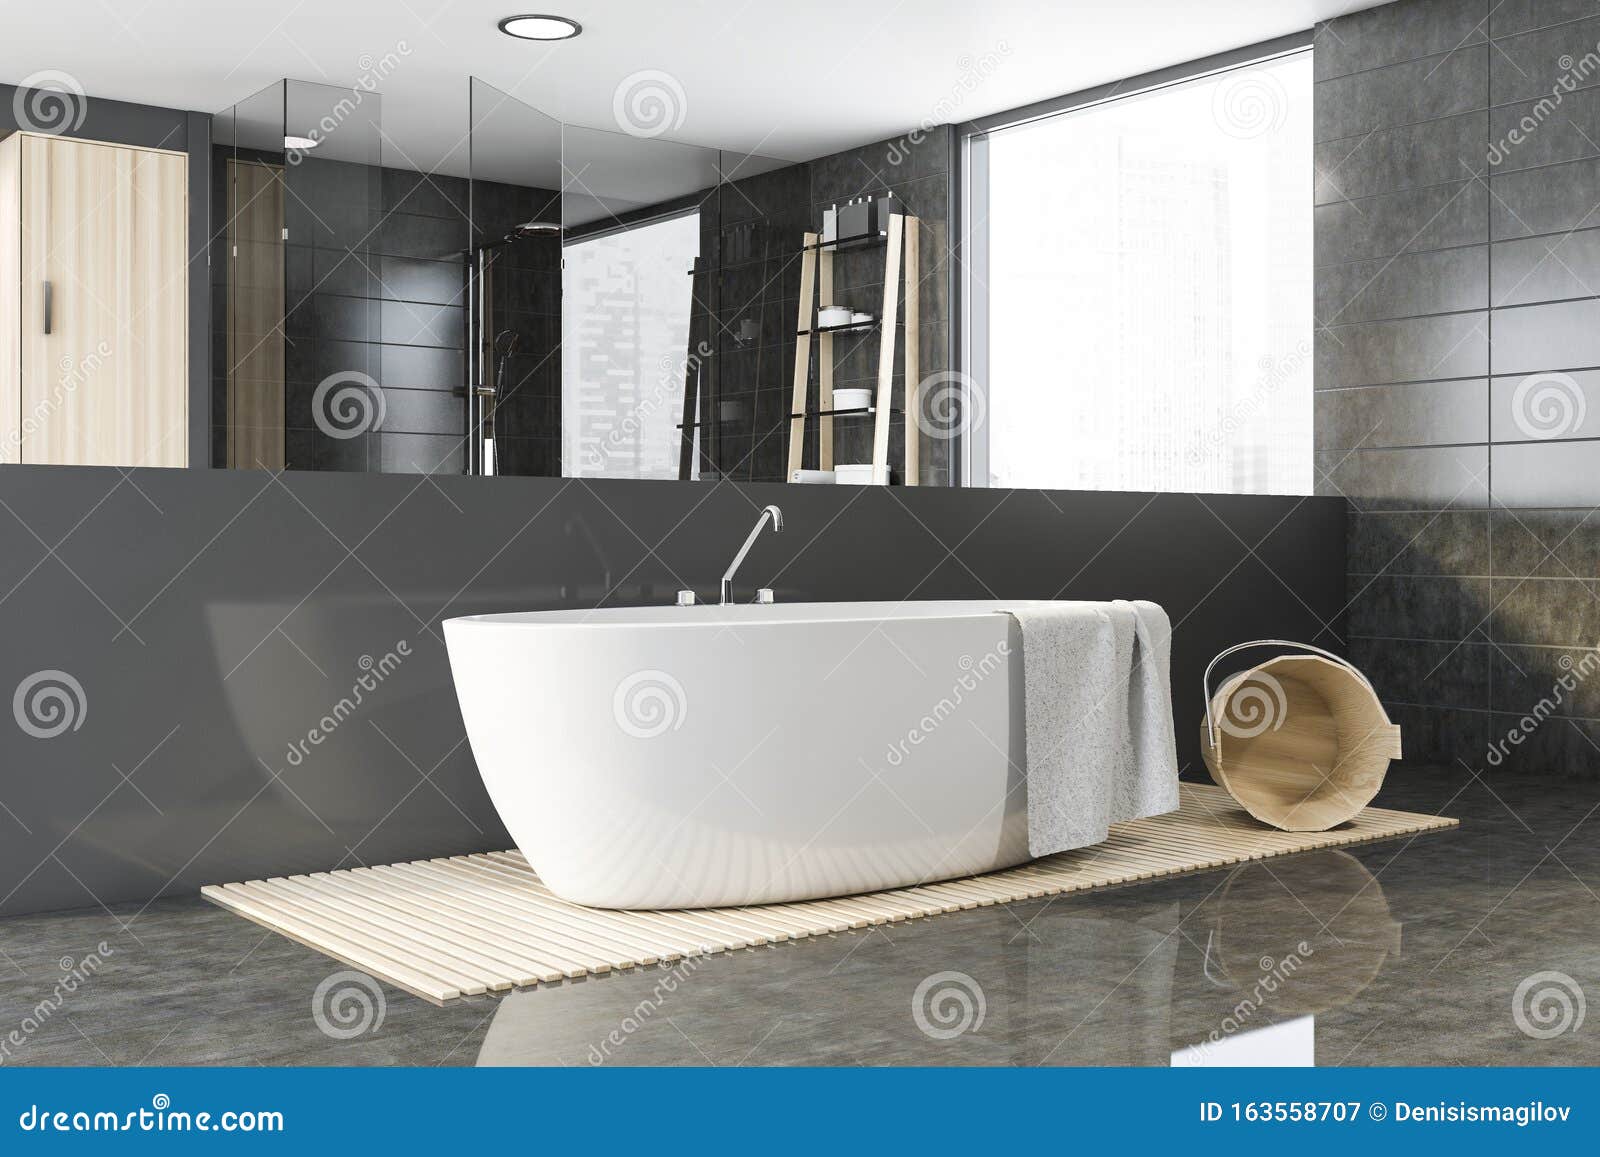 Spacious Gray Tile Bathroom Corner with Bathtub Stock Illustration ...